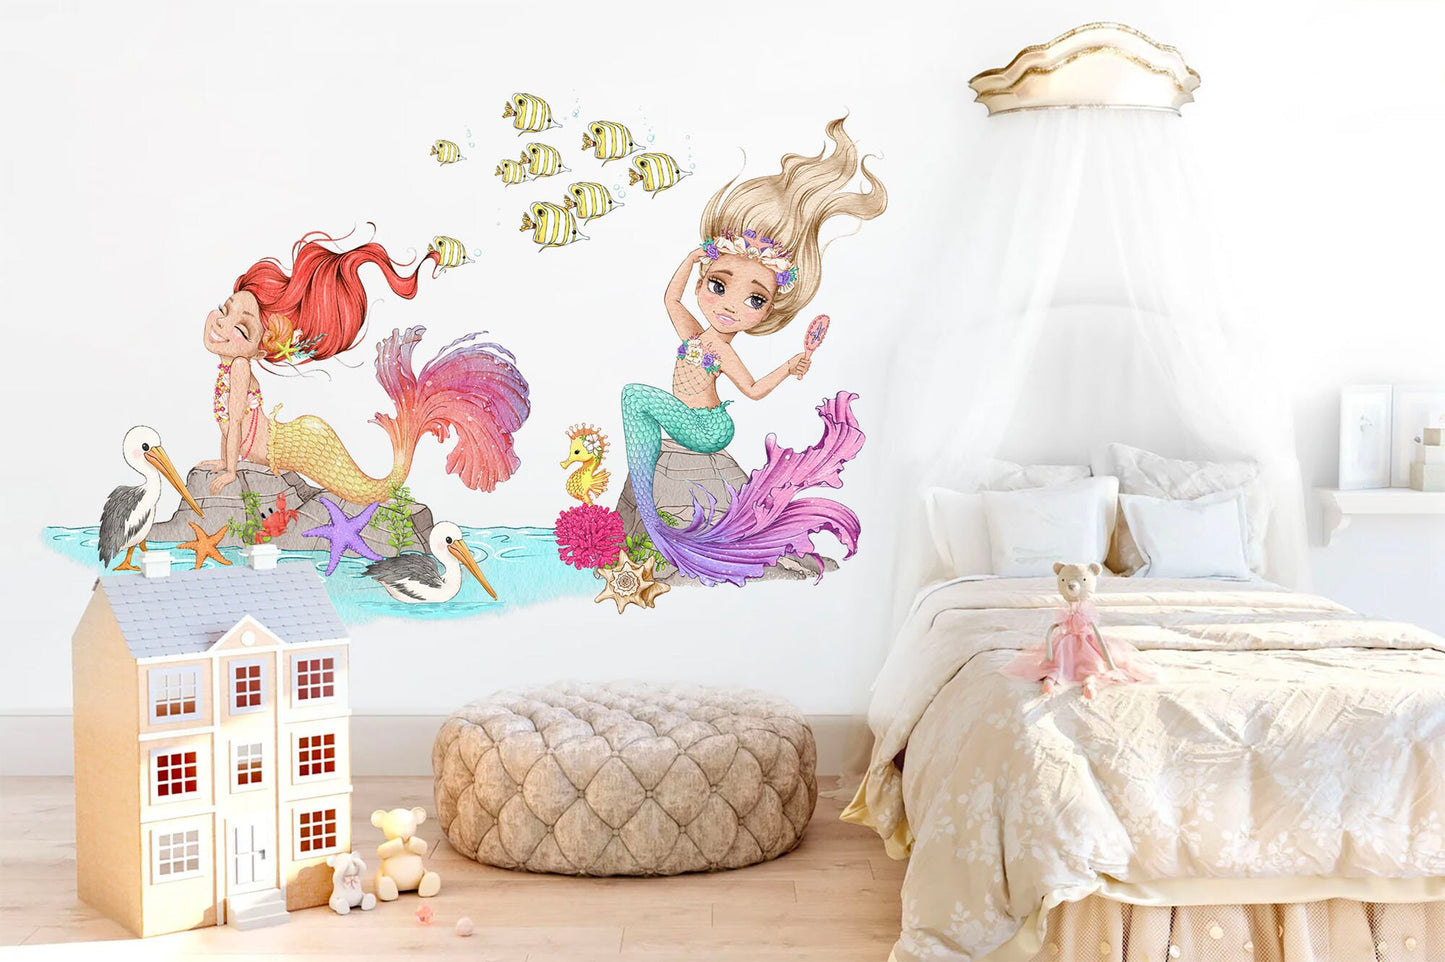 Dreamy Mermaid Shoreline Wall Mural - Beautiful Princess, Seabirds & Fish - Create a Serene Ambiance in Girls' Bedrooms - BR185